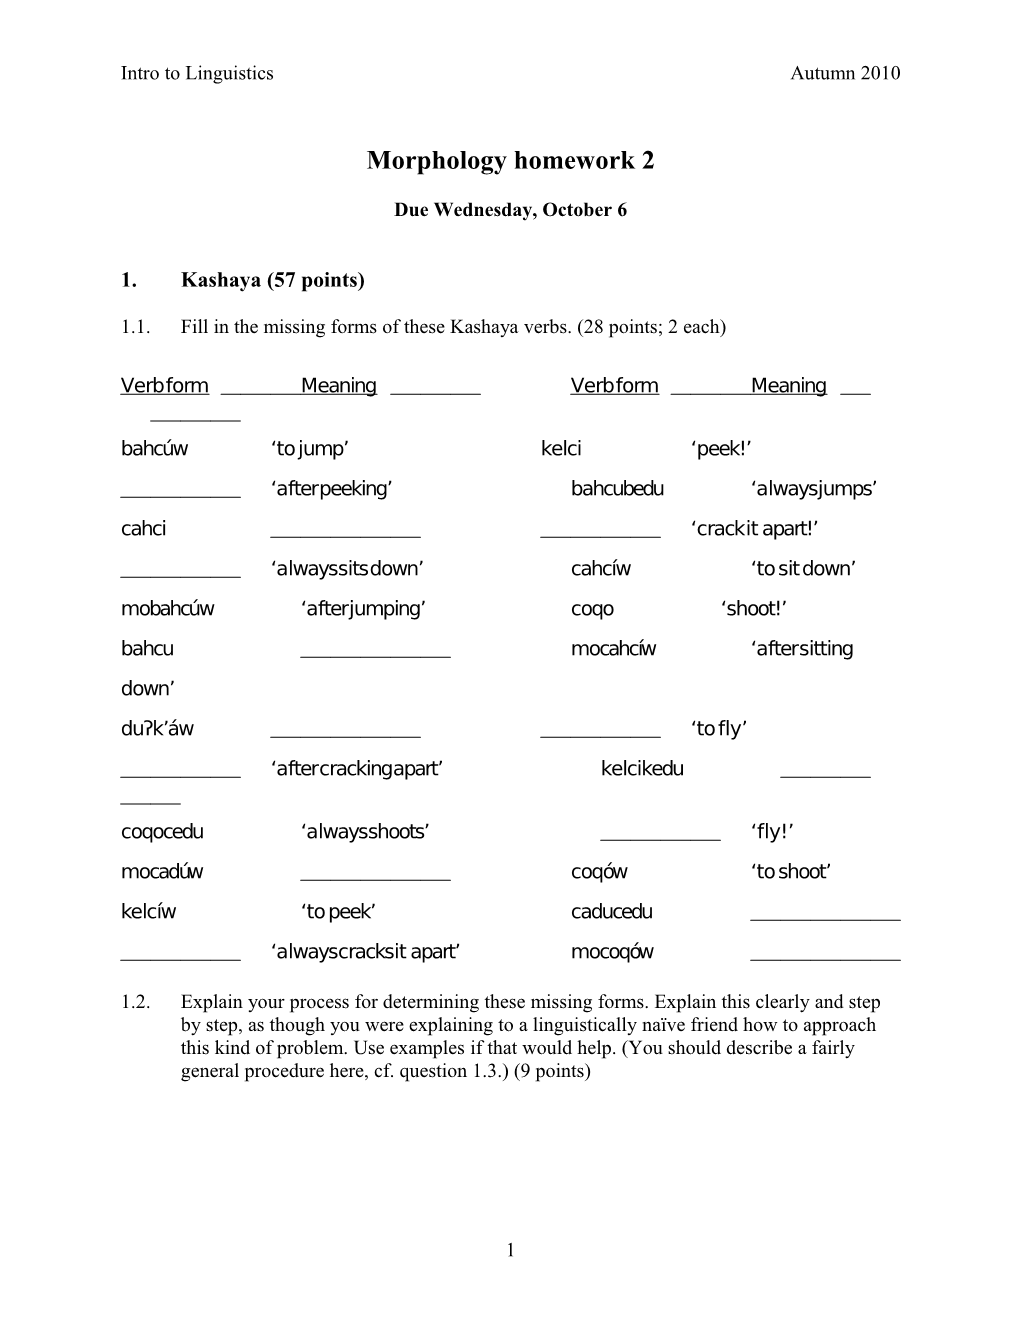 Morphology Homework 2